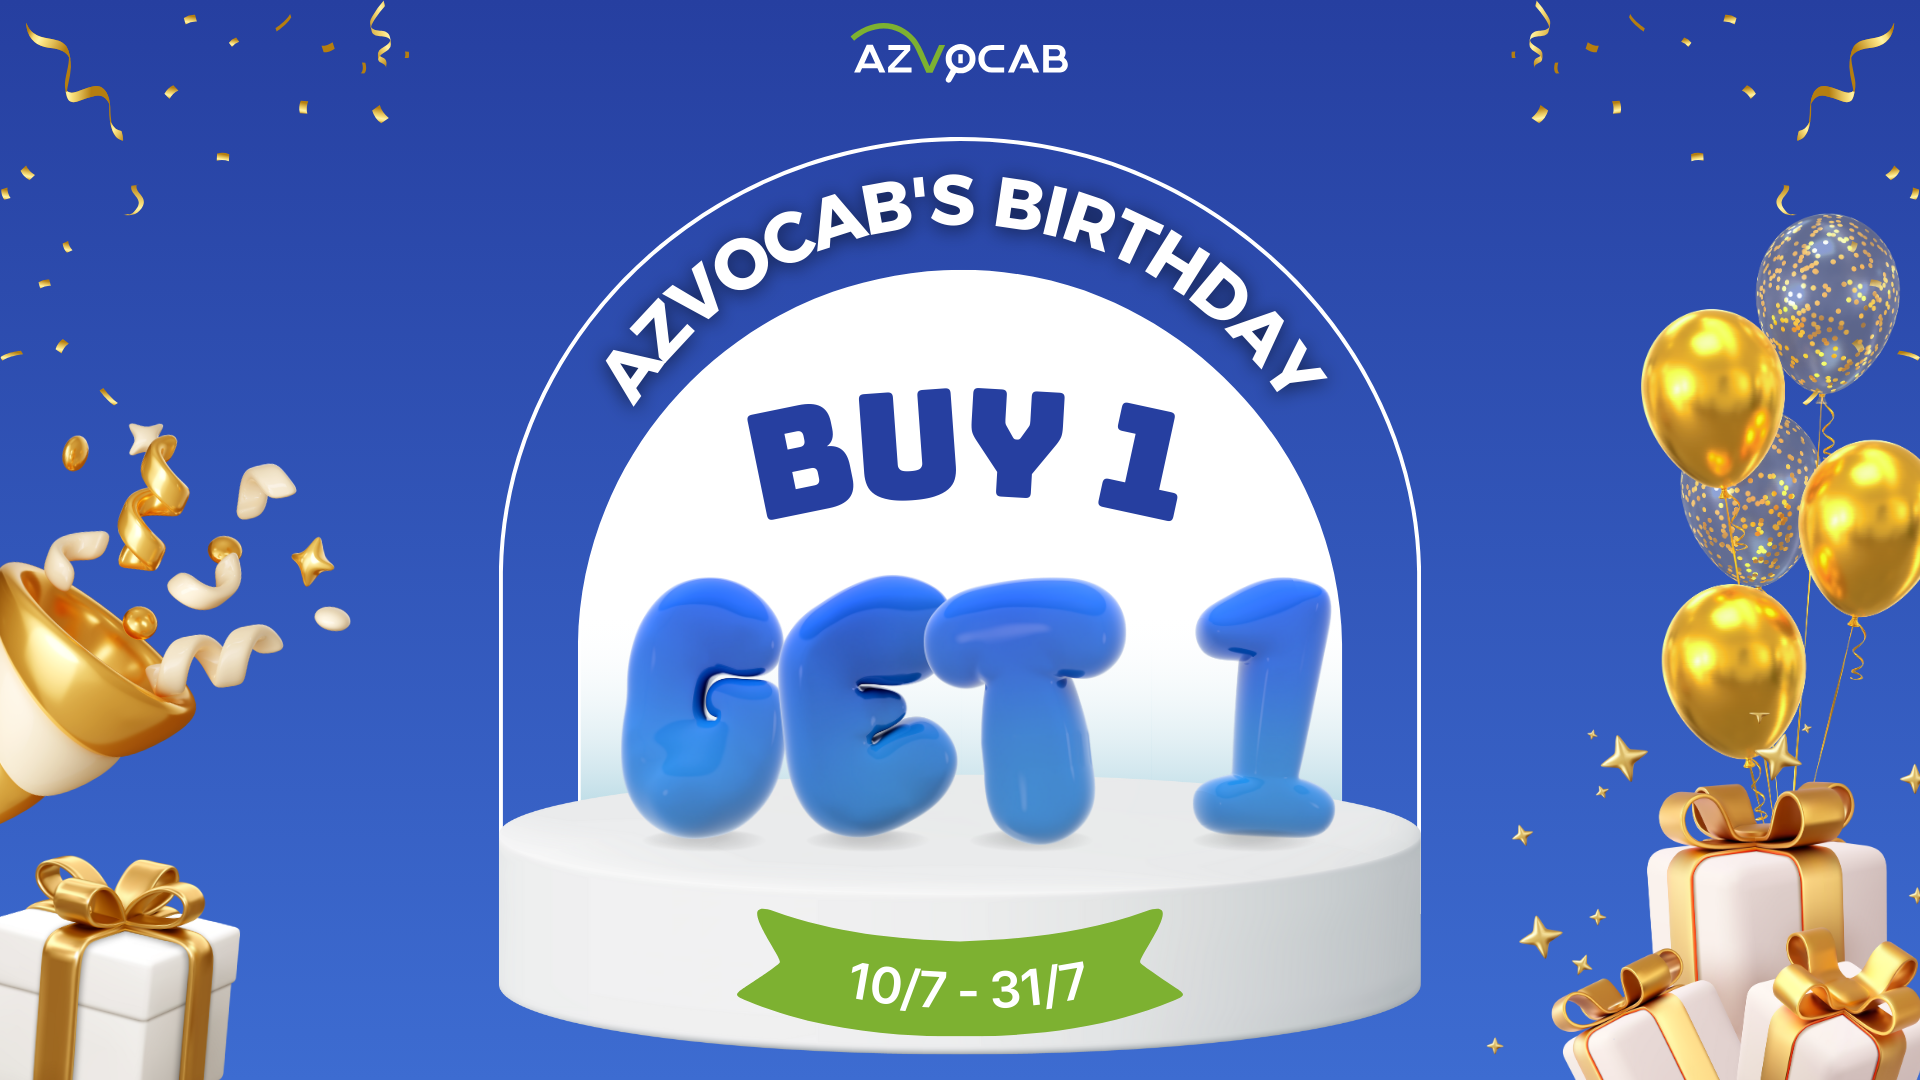 Celebrating azVocab's Birthday